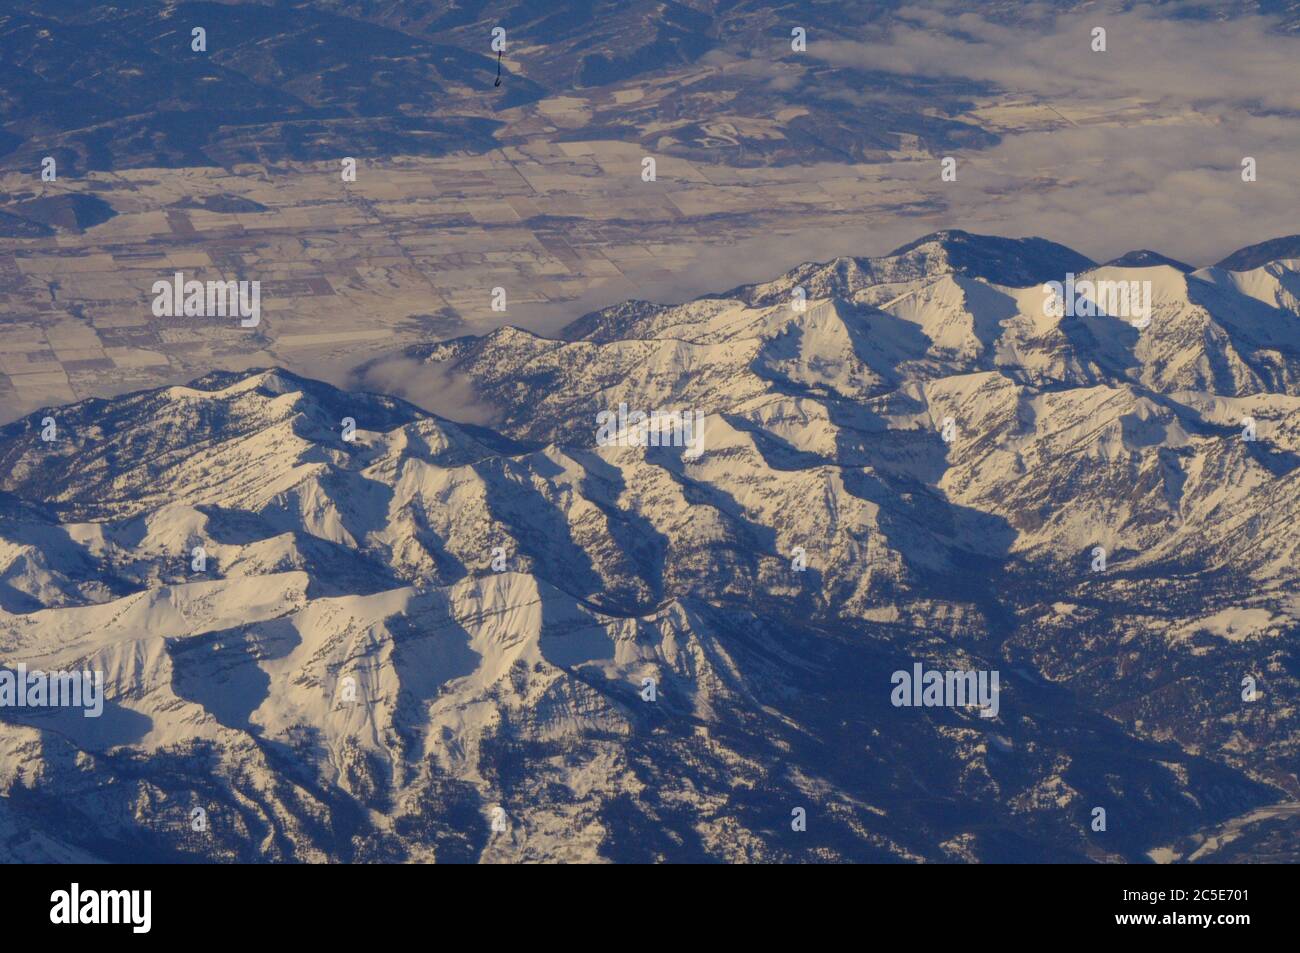 Catena montuosa innevata, USA Foto stock - Alamy